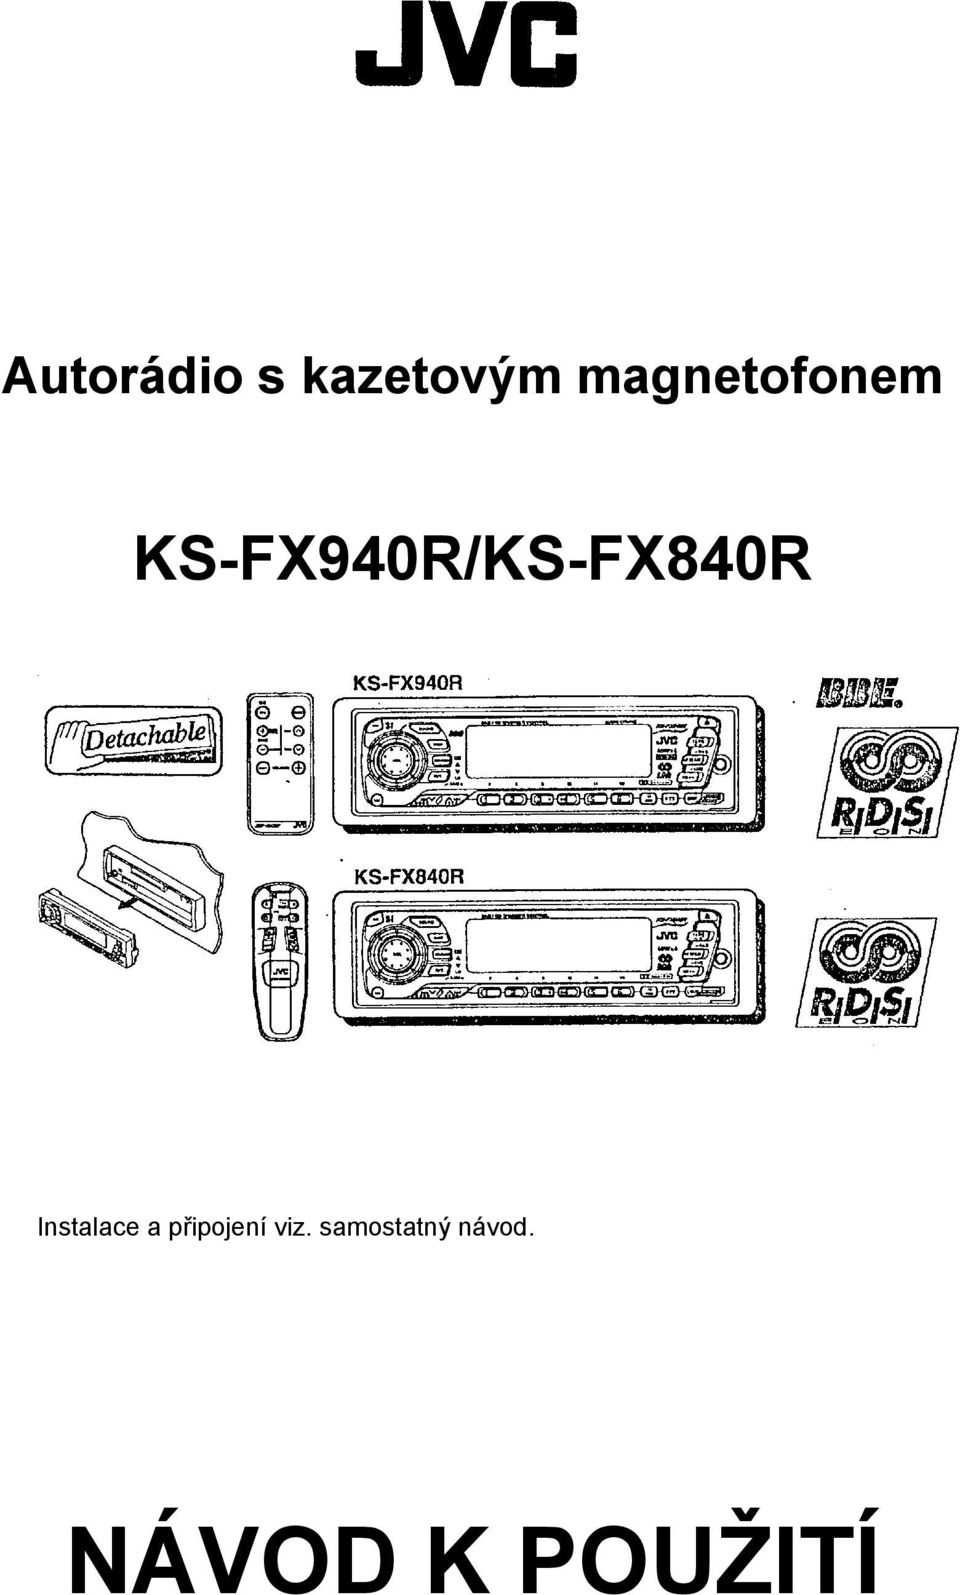 KS-FX940R/KS-FX840R